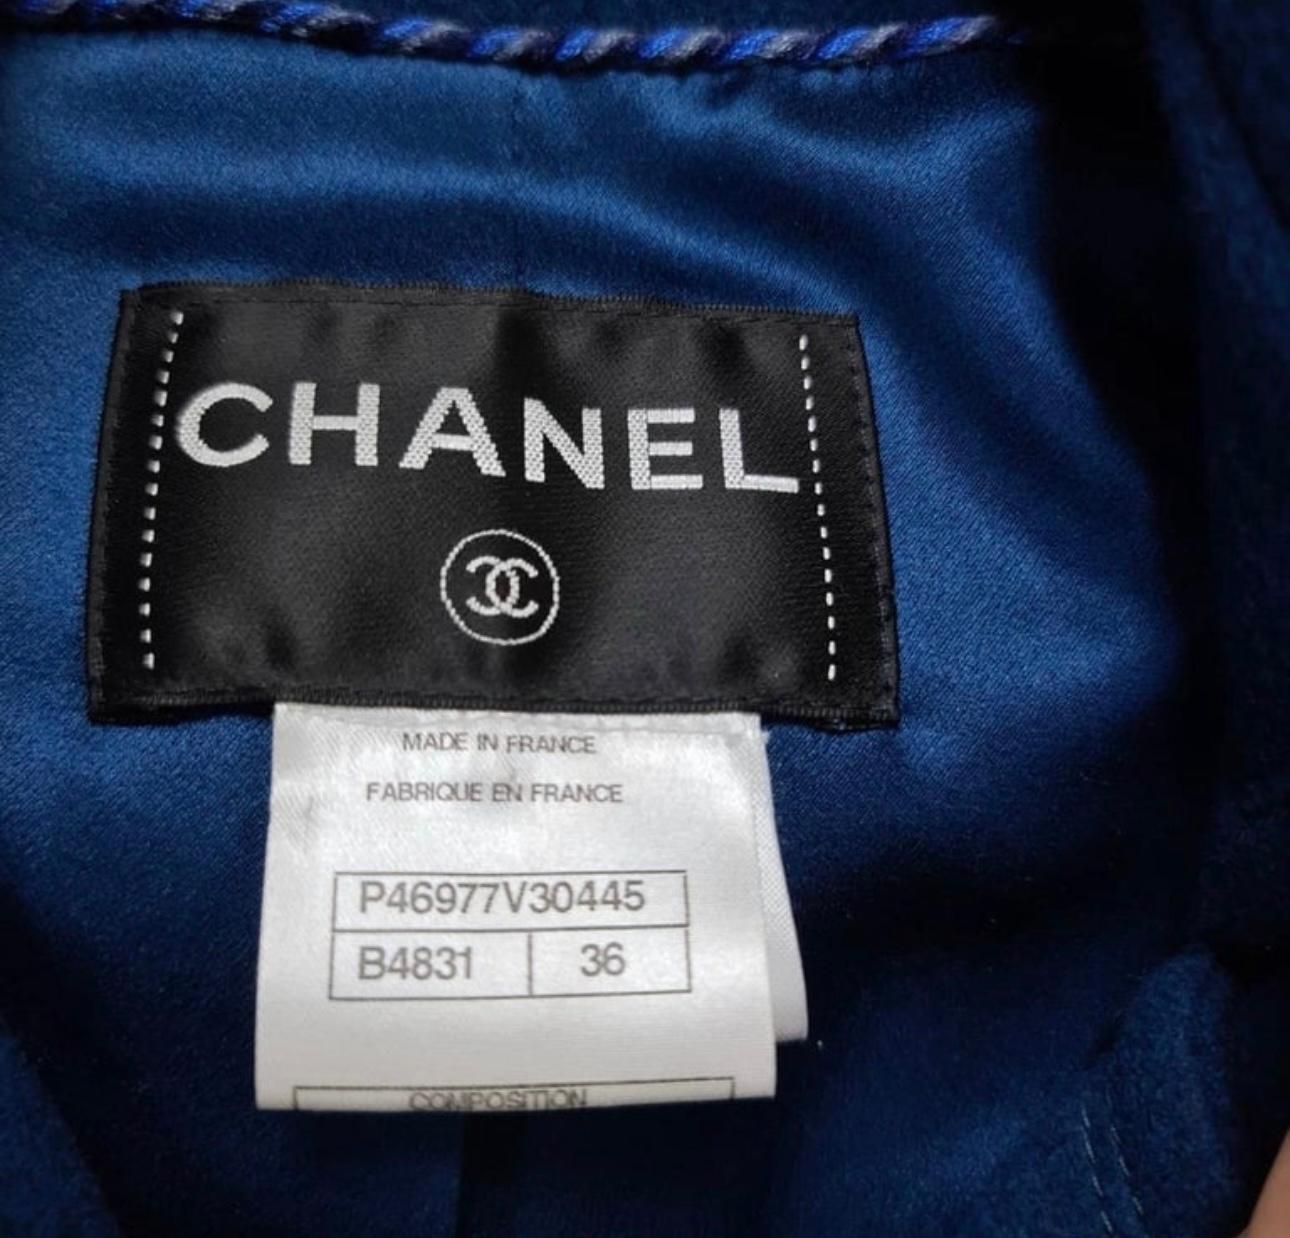 Chanel Cara Delevingne Style Runway Jacket For Sale 6